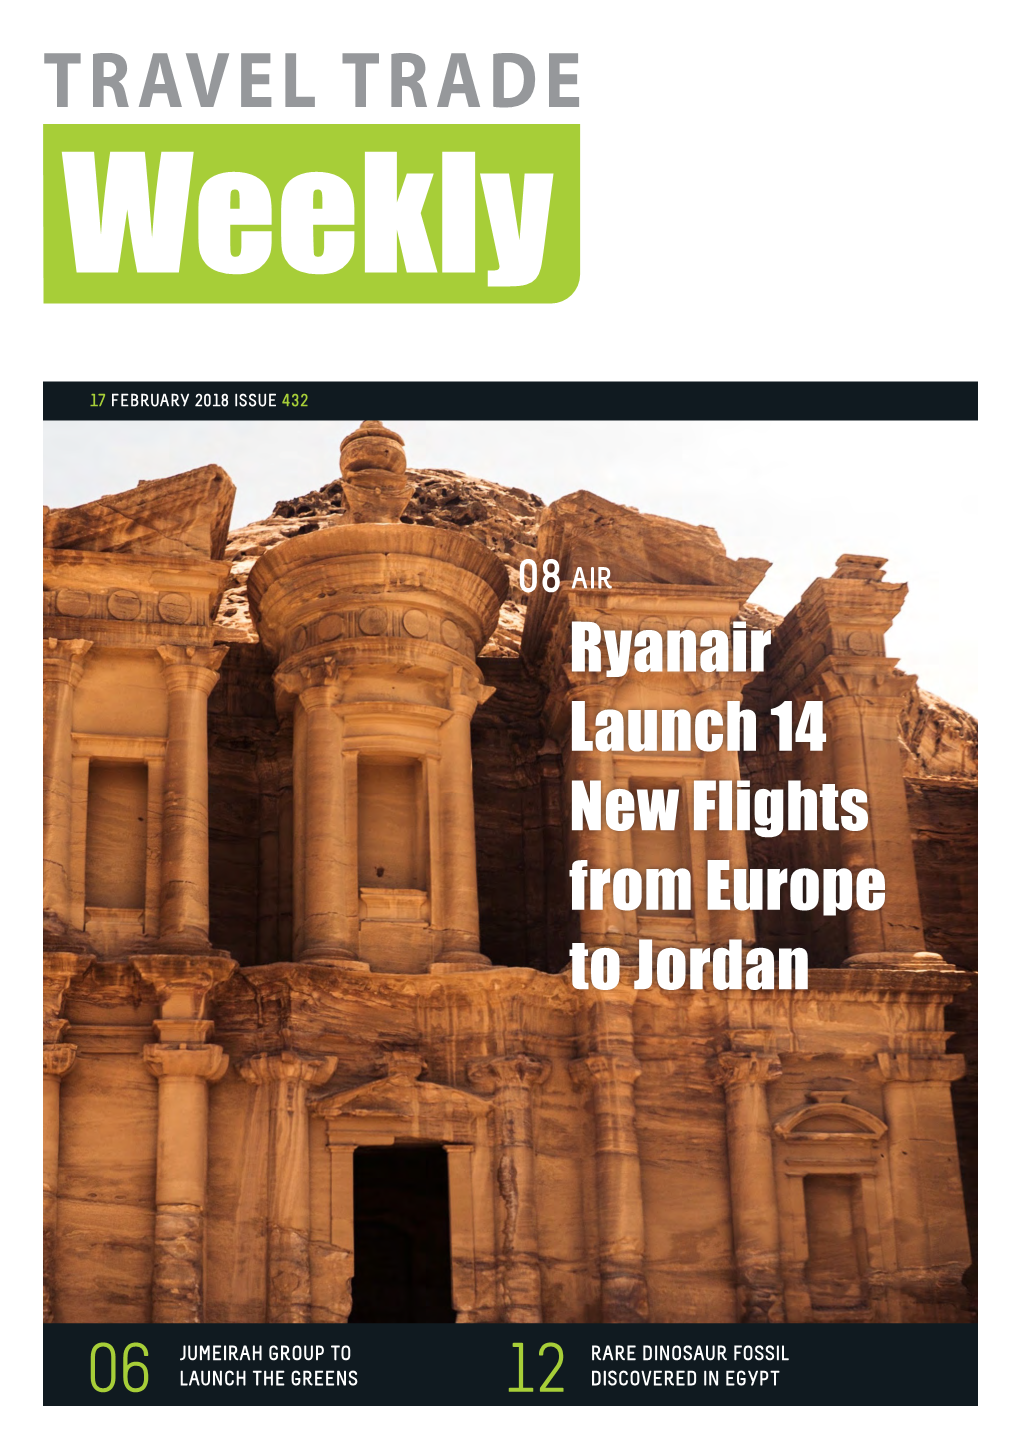 Ryanair Launch 14 New Flights from Europe to Jordan